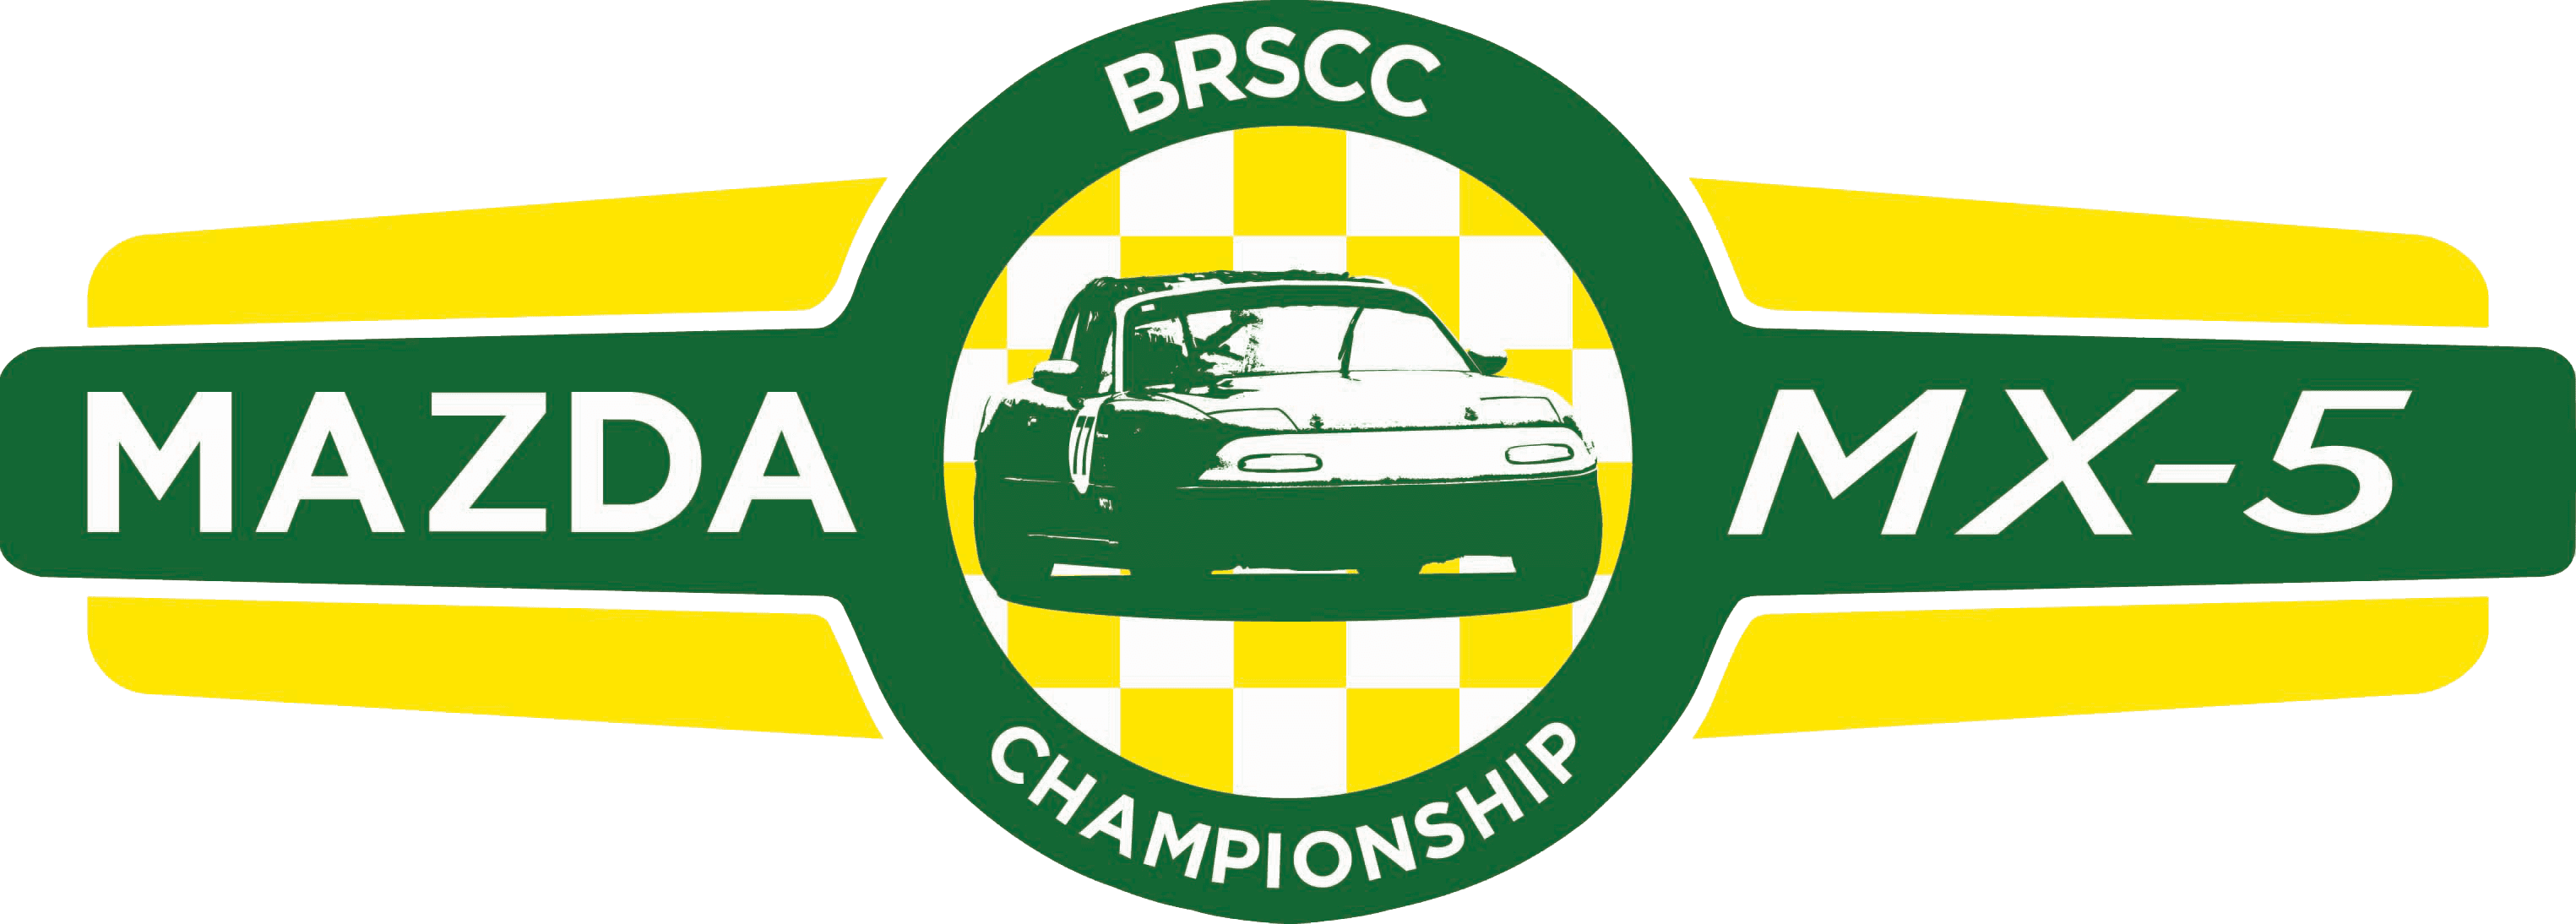 British Racing and Sports Car Club Logo